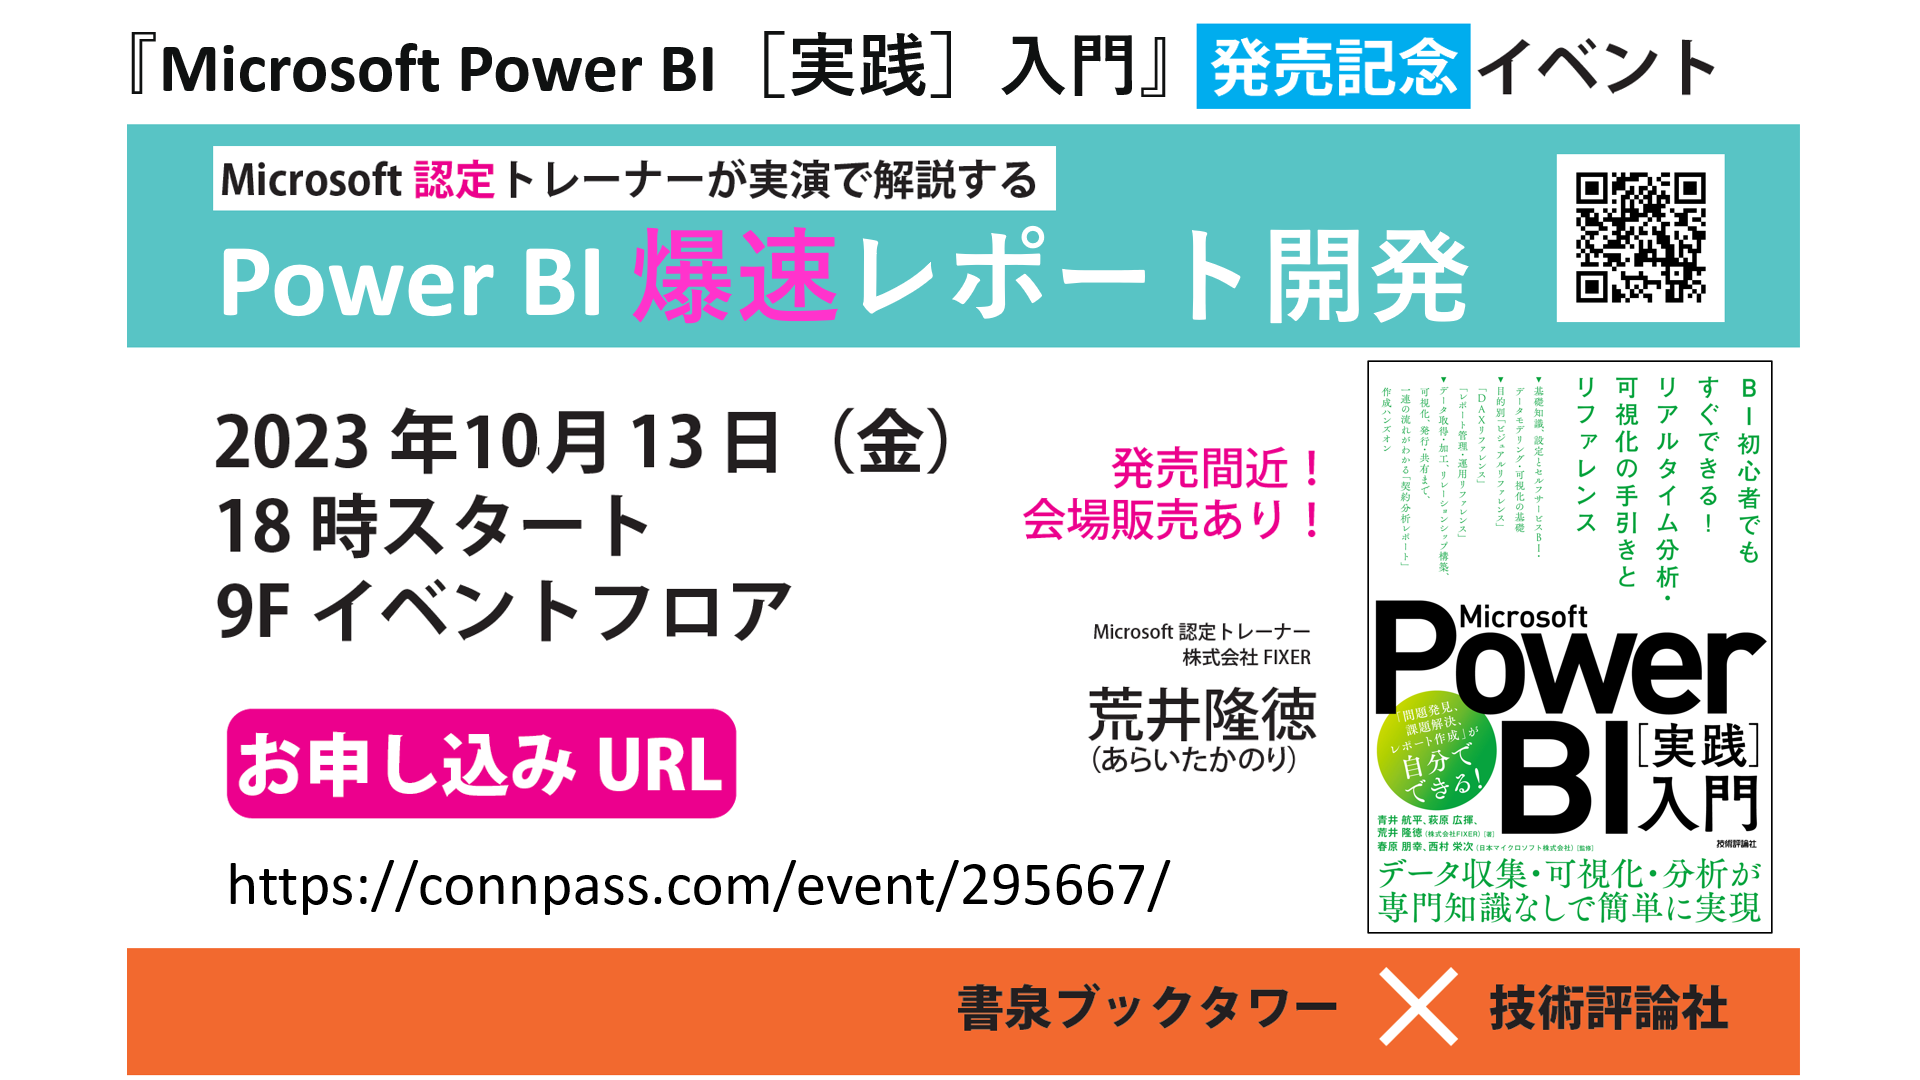 【PR】Microsoft認定トレーナーが実演で解説するPower BI 講座を無料で開催します！！